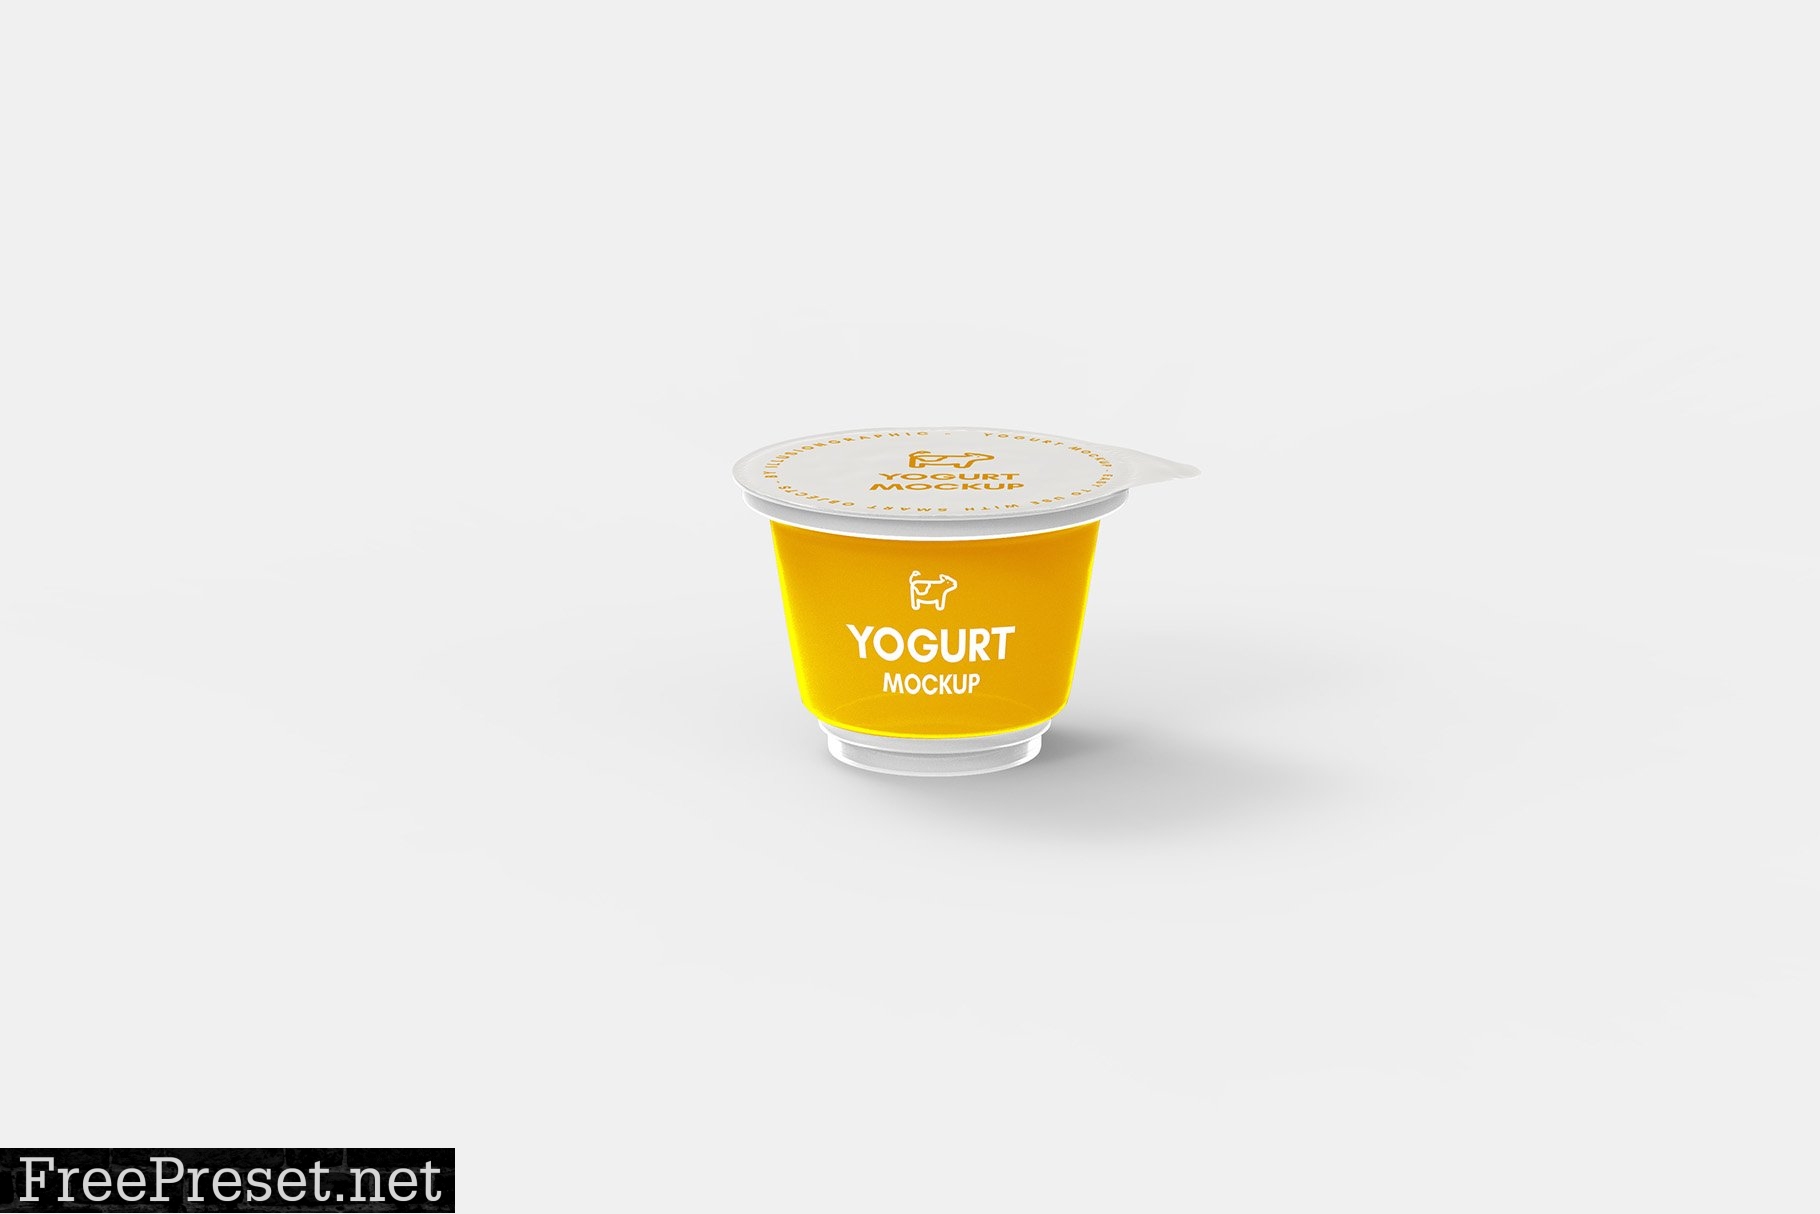 Yogurt Mockups - 9 Views 4768962